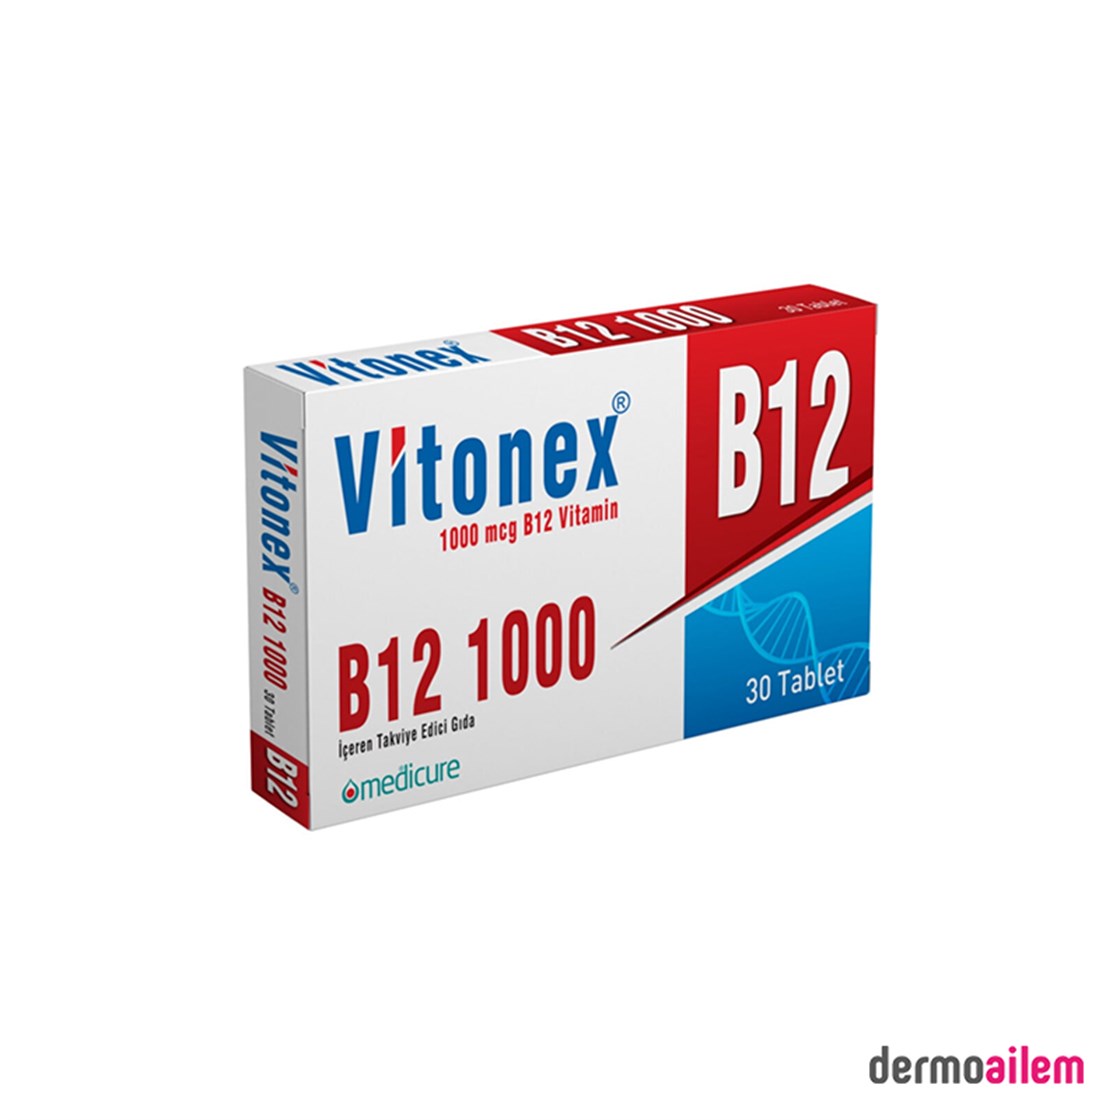 Vitonex B12 Vitamin 1000mcg 30 Tablet